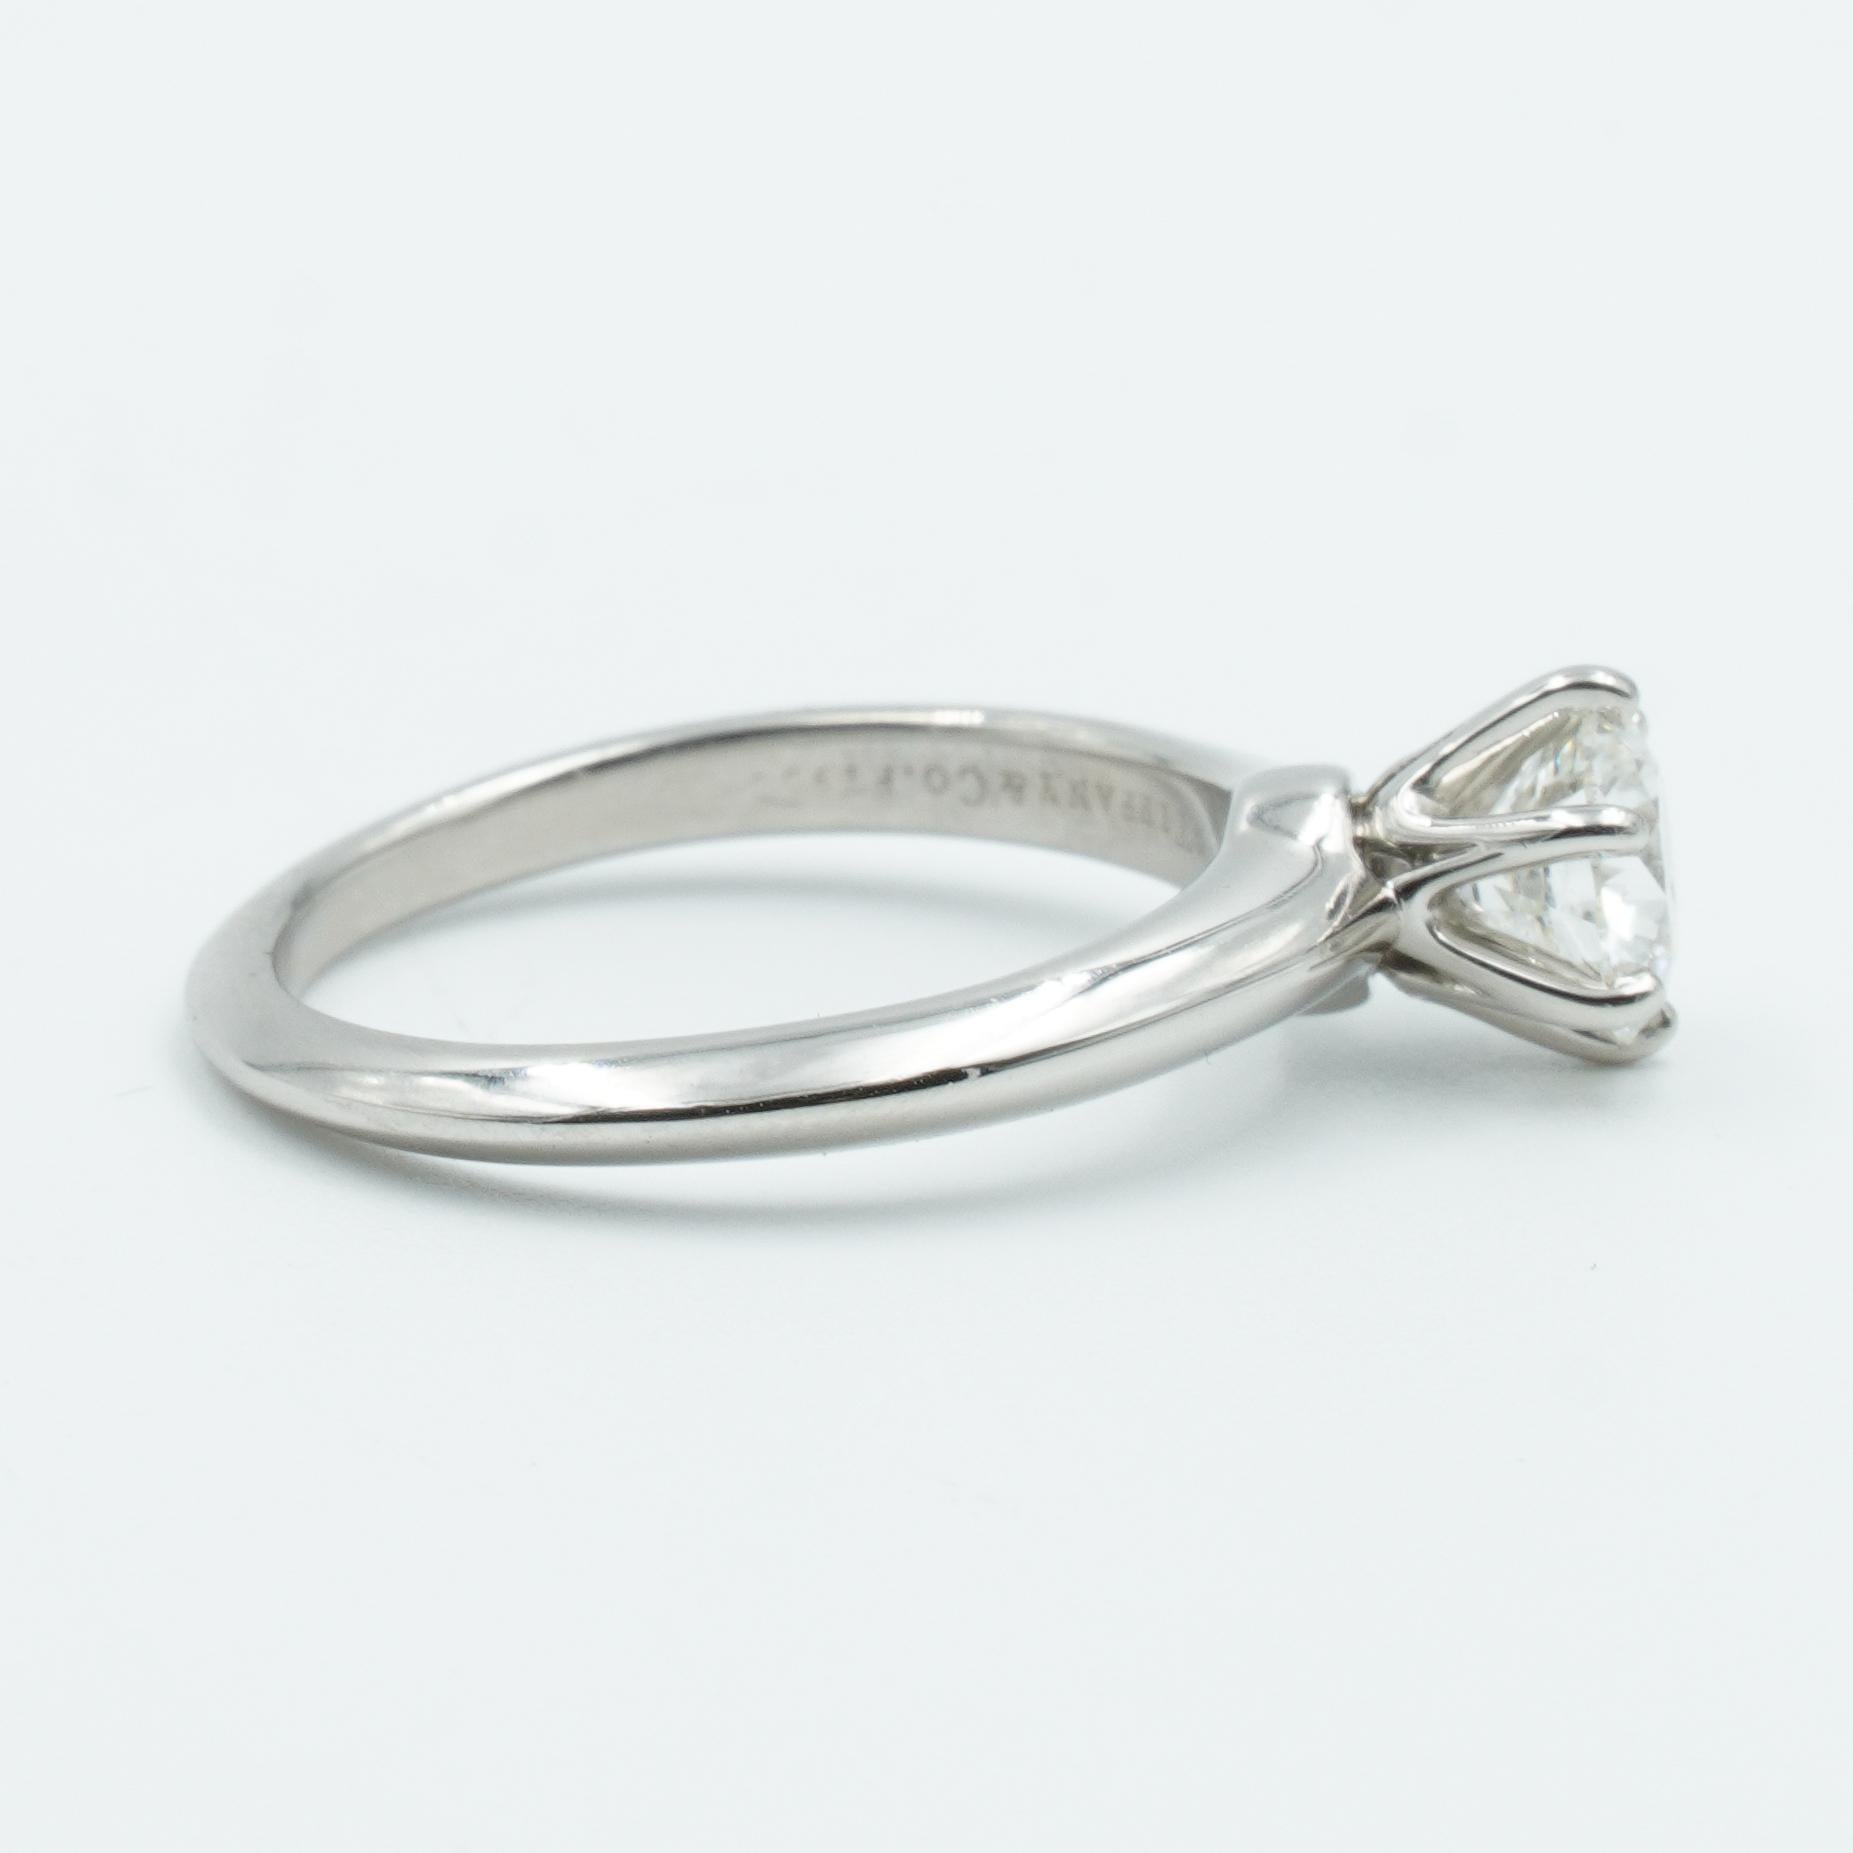 Romantic Tiffany & Co. 1.54 Ctw Diamond Engagement Ring Set in Platinum w. Box